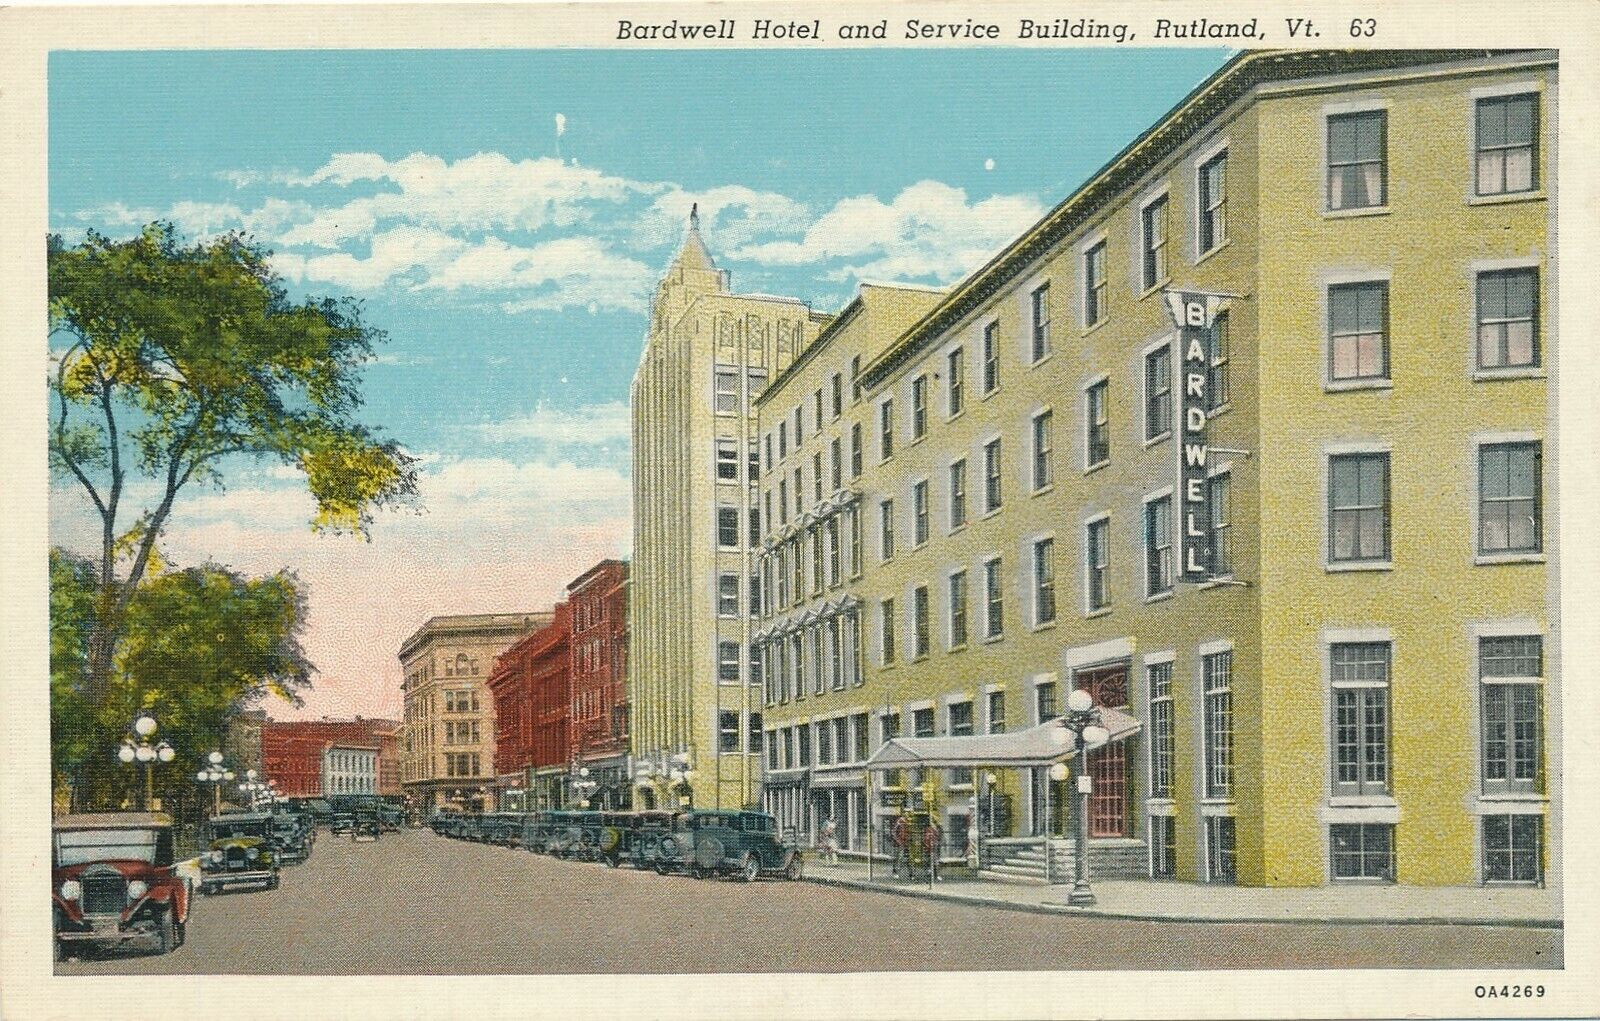 RUTLAND VT – Bardwell Hotel and Service Building